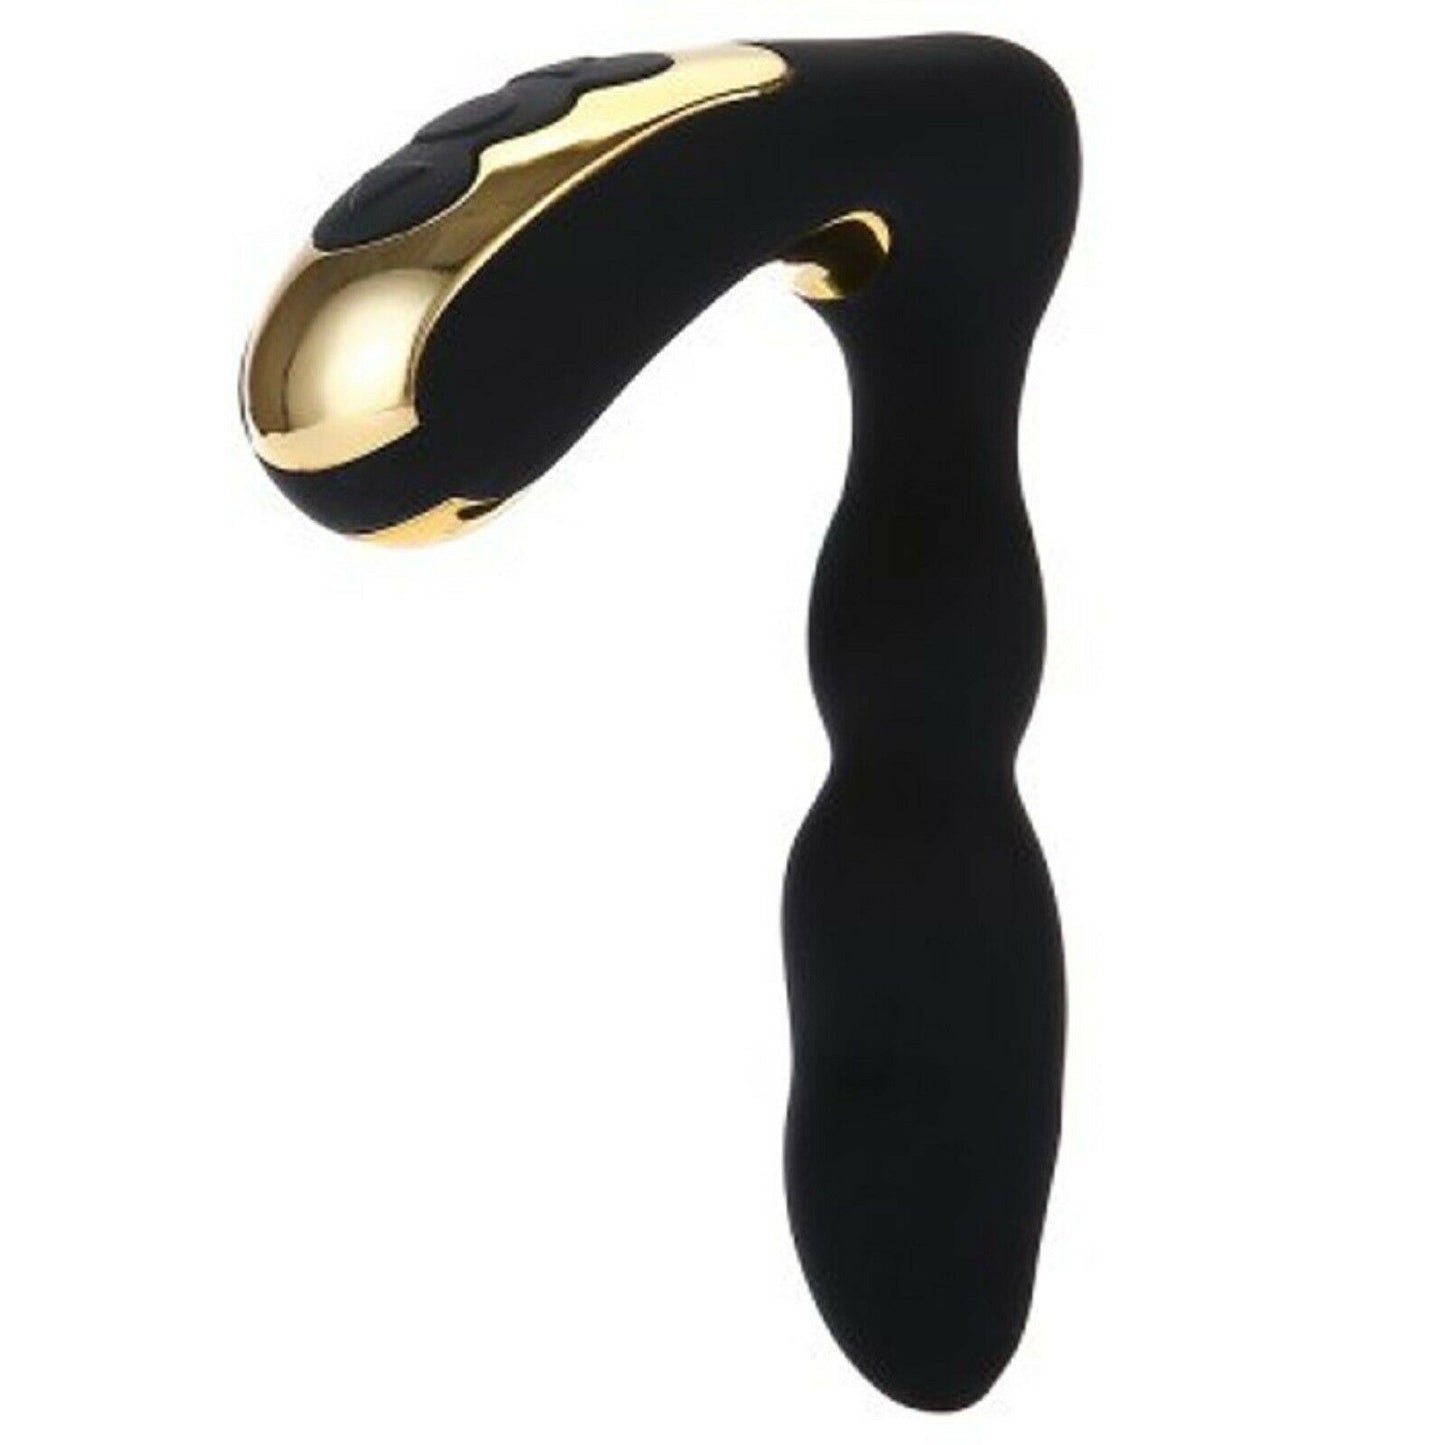 NV Toys Anal Plug Prostate Massager Vibrator Men Butt USB Male Adult Sex Toy